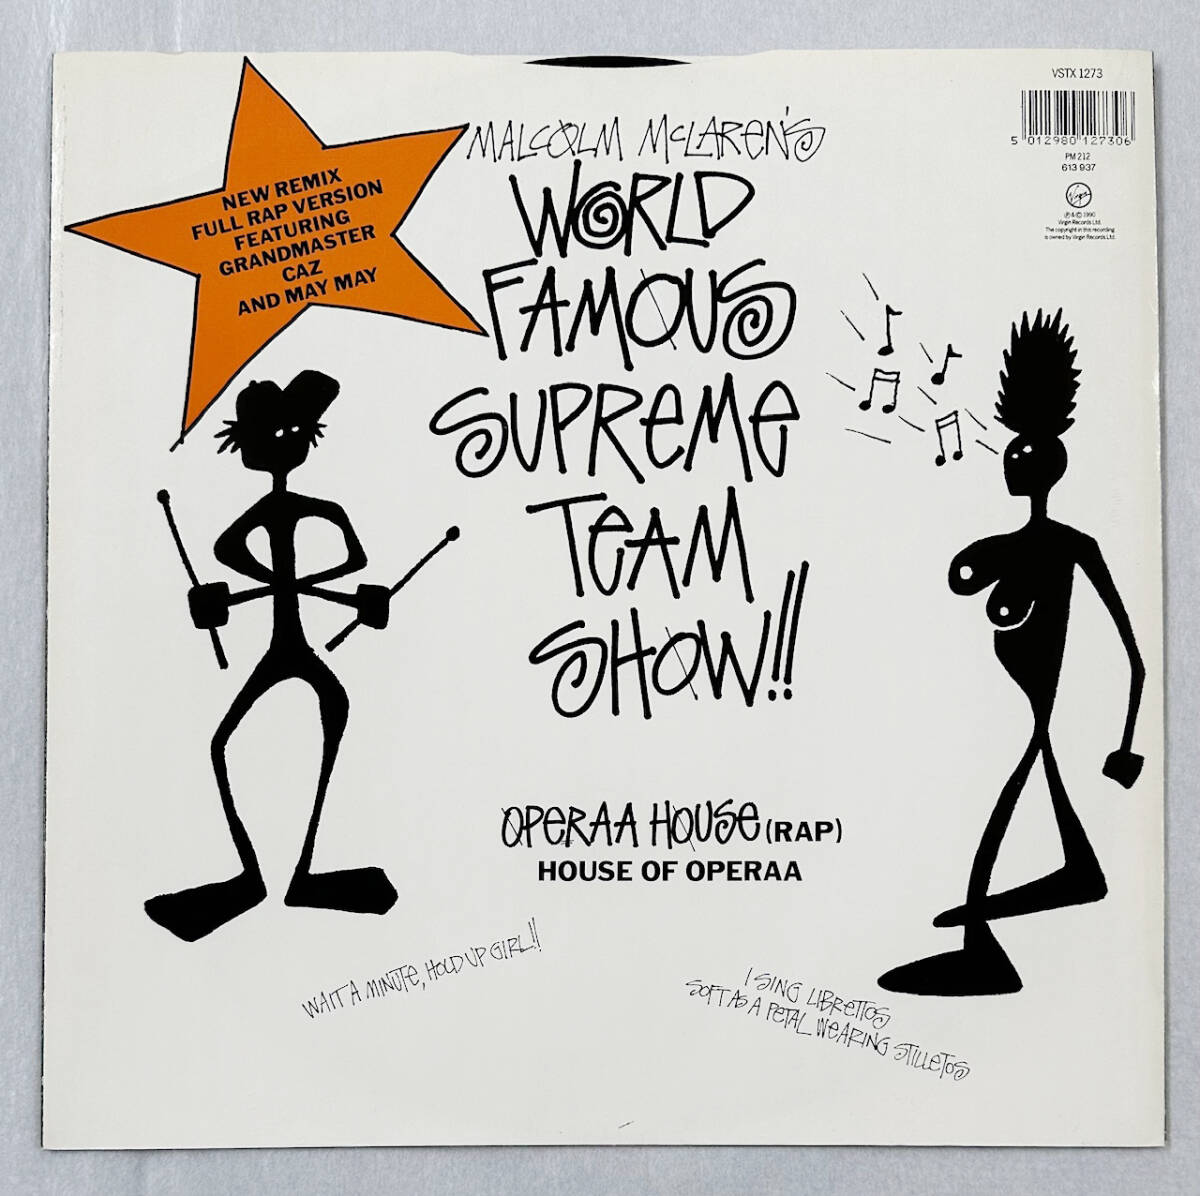 #1990 год оригинал UK запись Malcolm McLaren*s World*s Famous Supreme Team Show - Operaa House (Rap) 12~EP VSTX 1273 Virgin Stussy